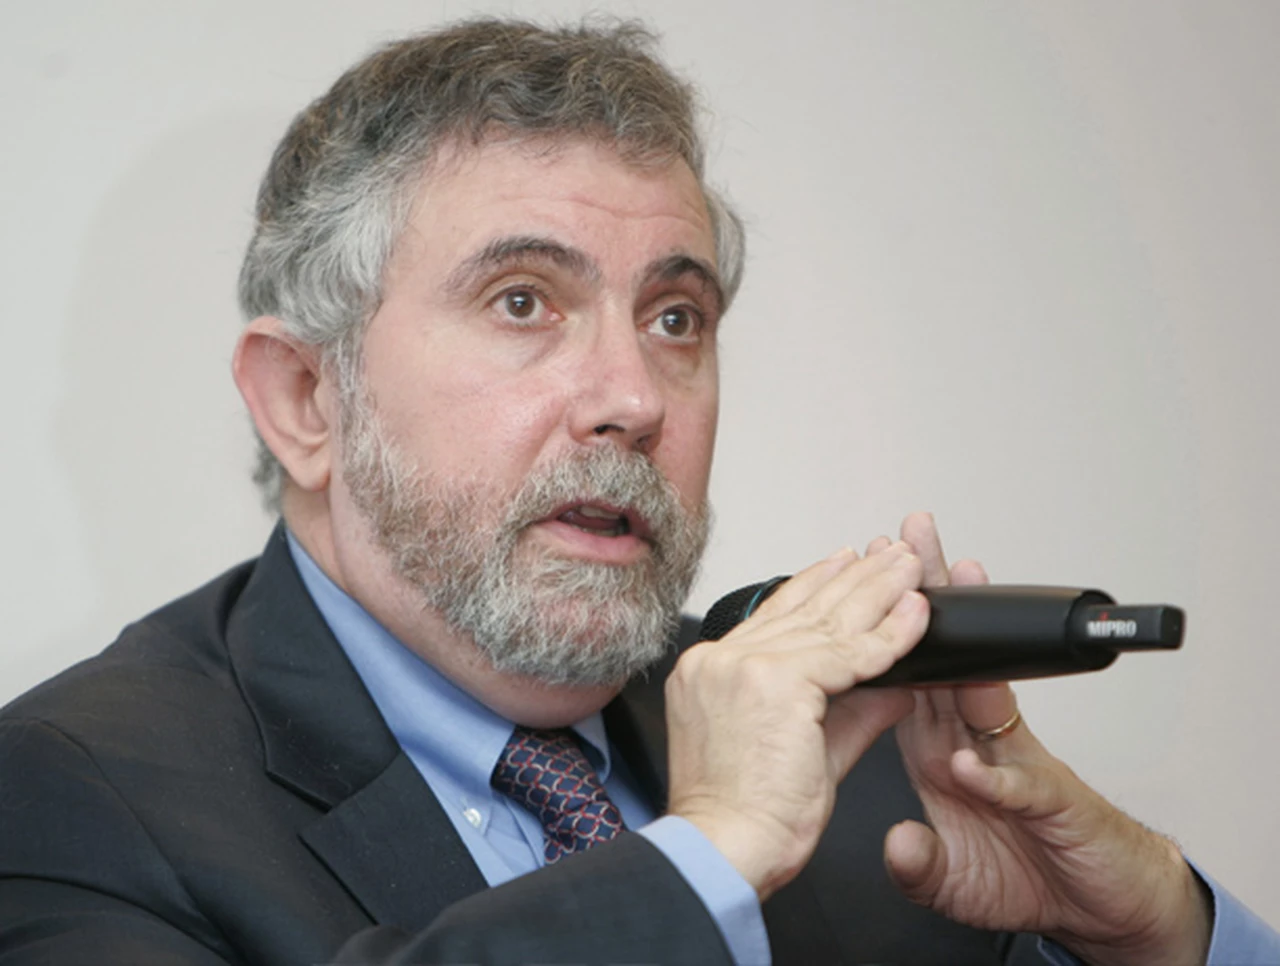 Paul Krugman: "Argentina tiene para mostrar una extraordinaria historia de éxito"